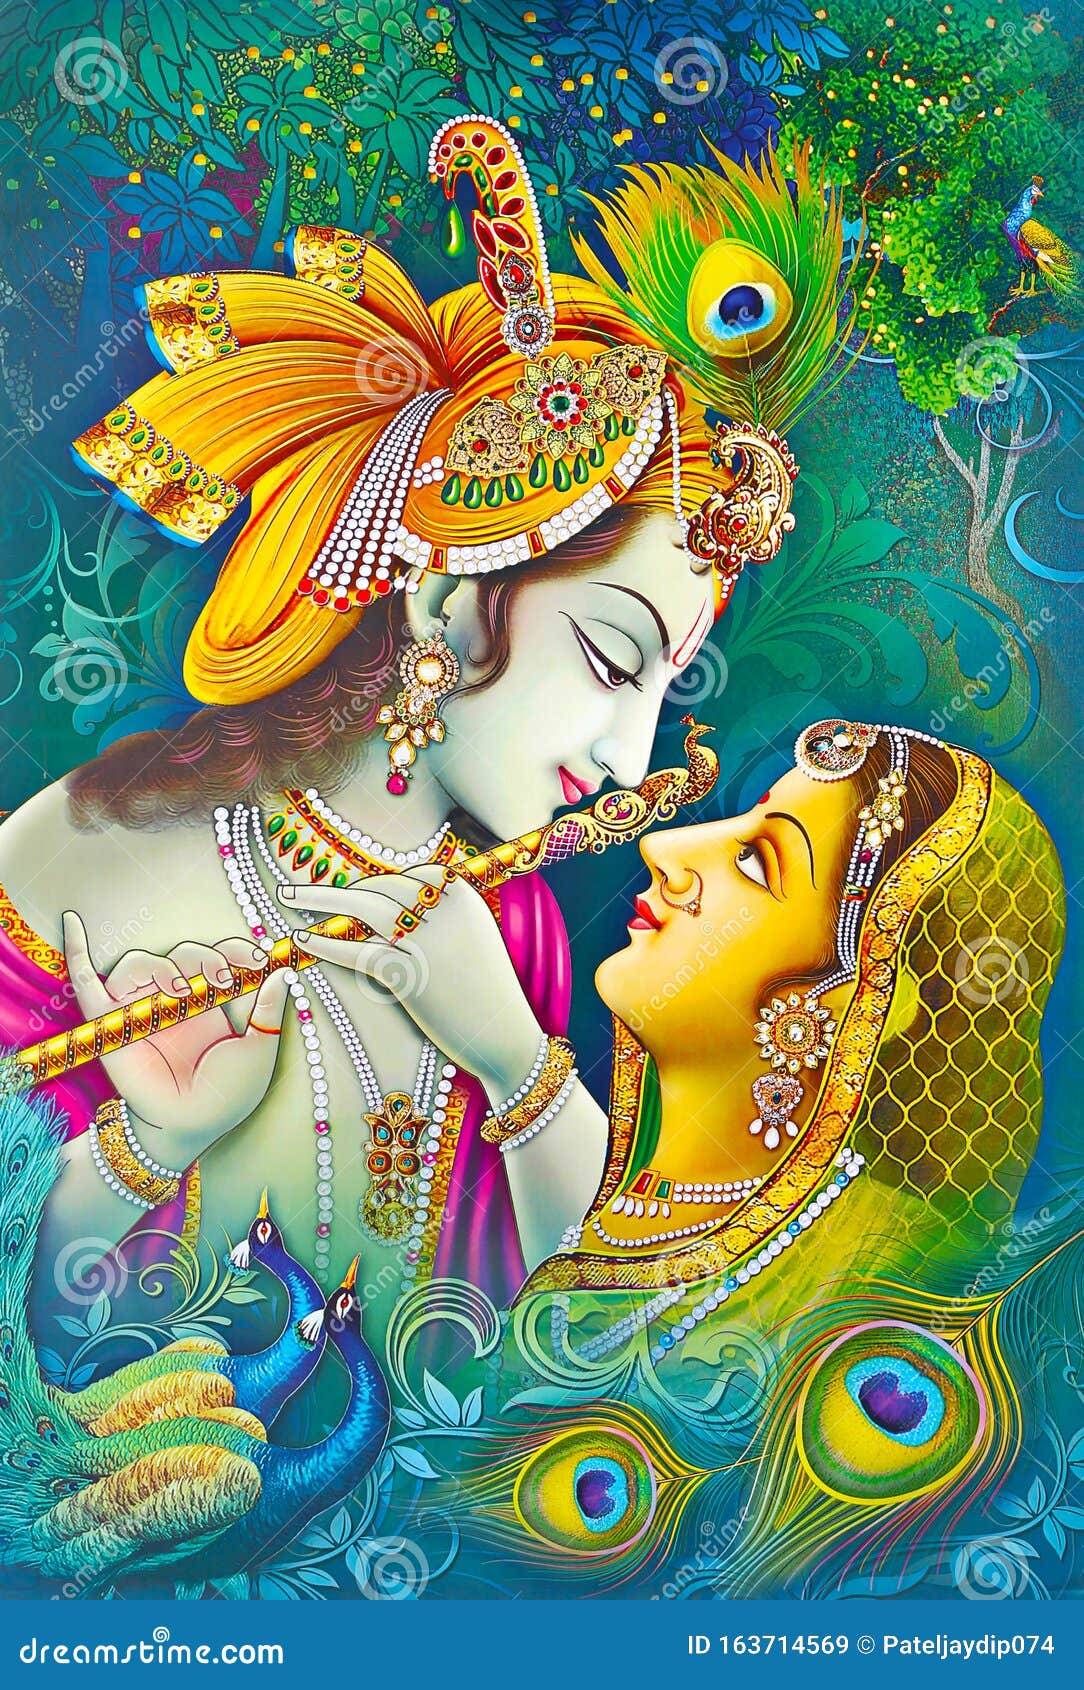 16,621 Krishna Stock Photos - Free & Royalty-Free Stock Photos from  Dreamstime